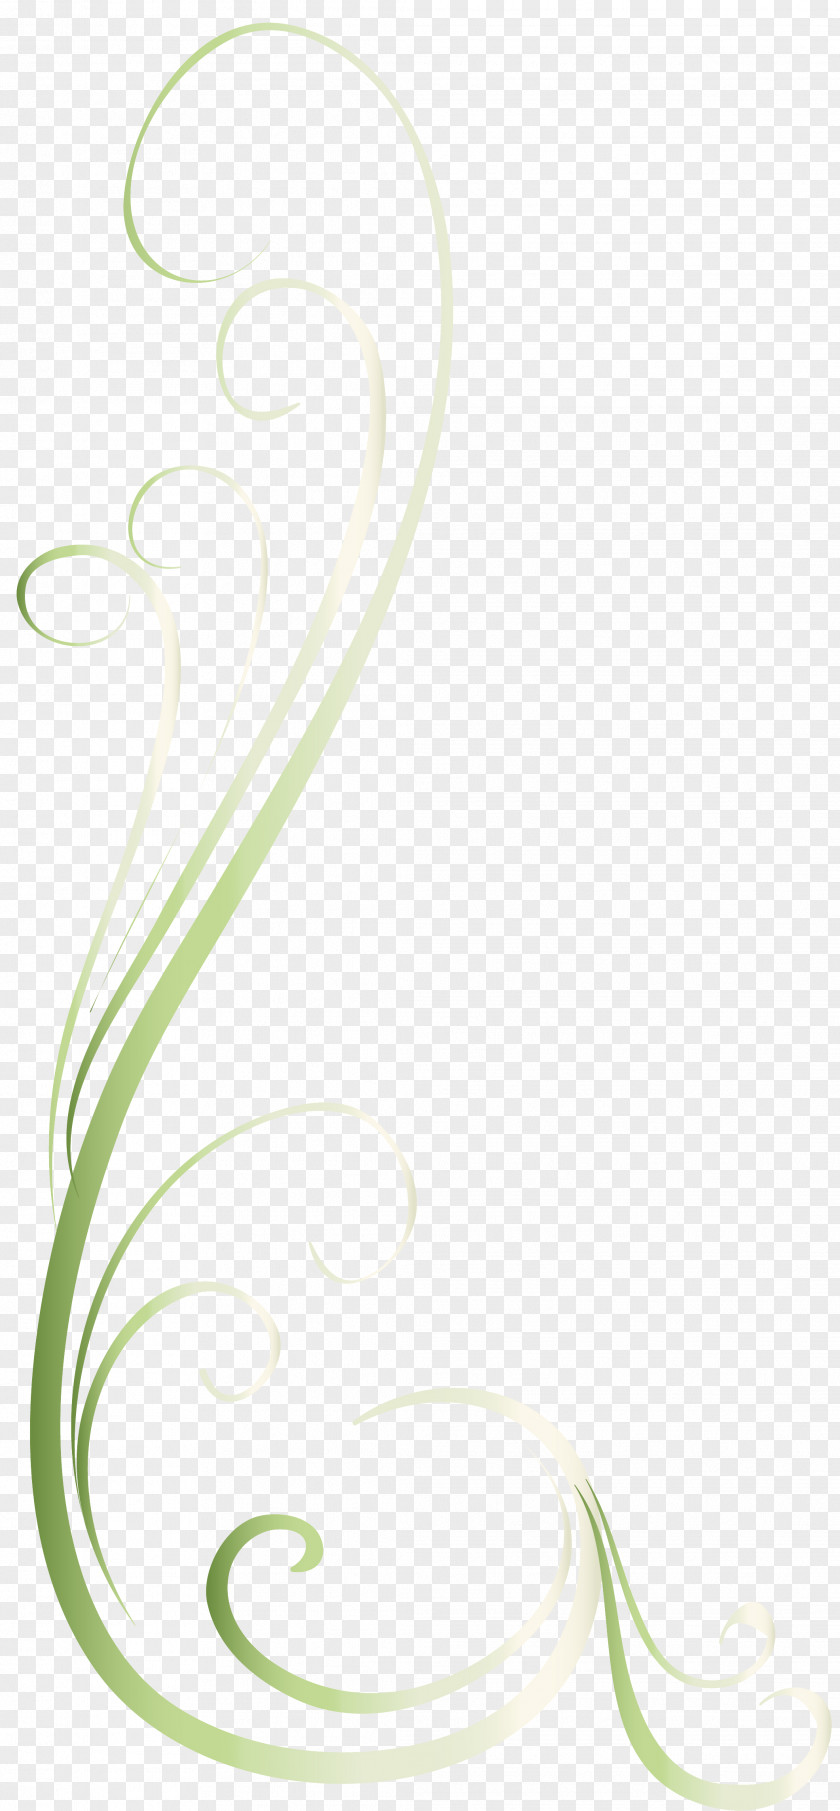 Floralelement Green Font PNG